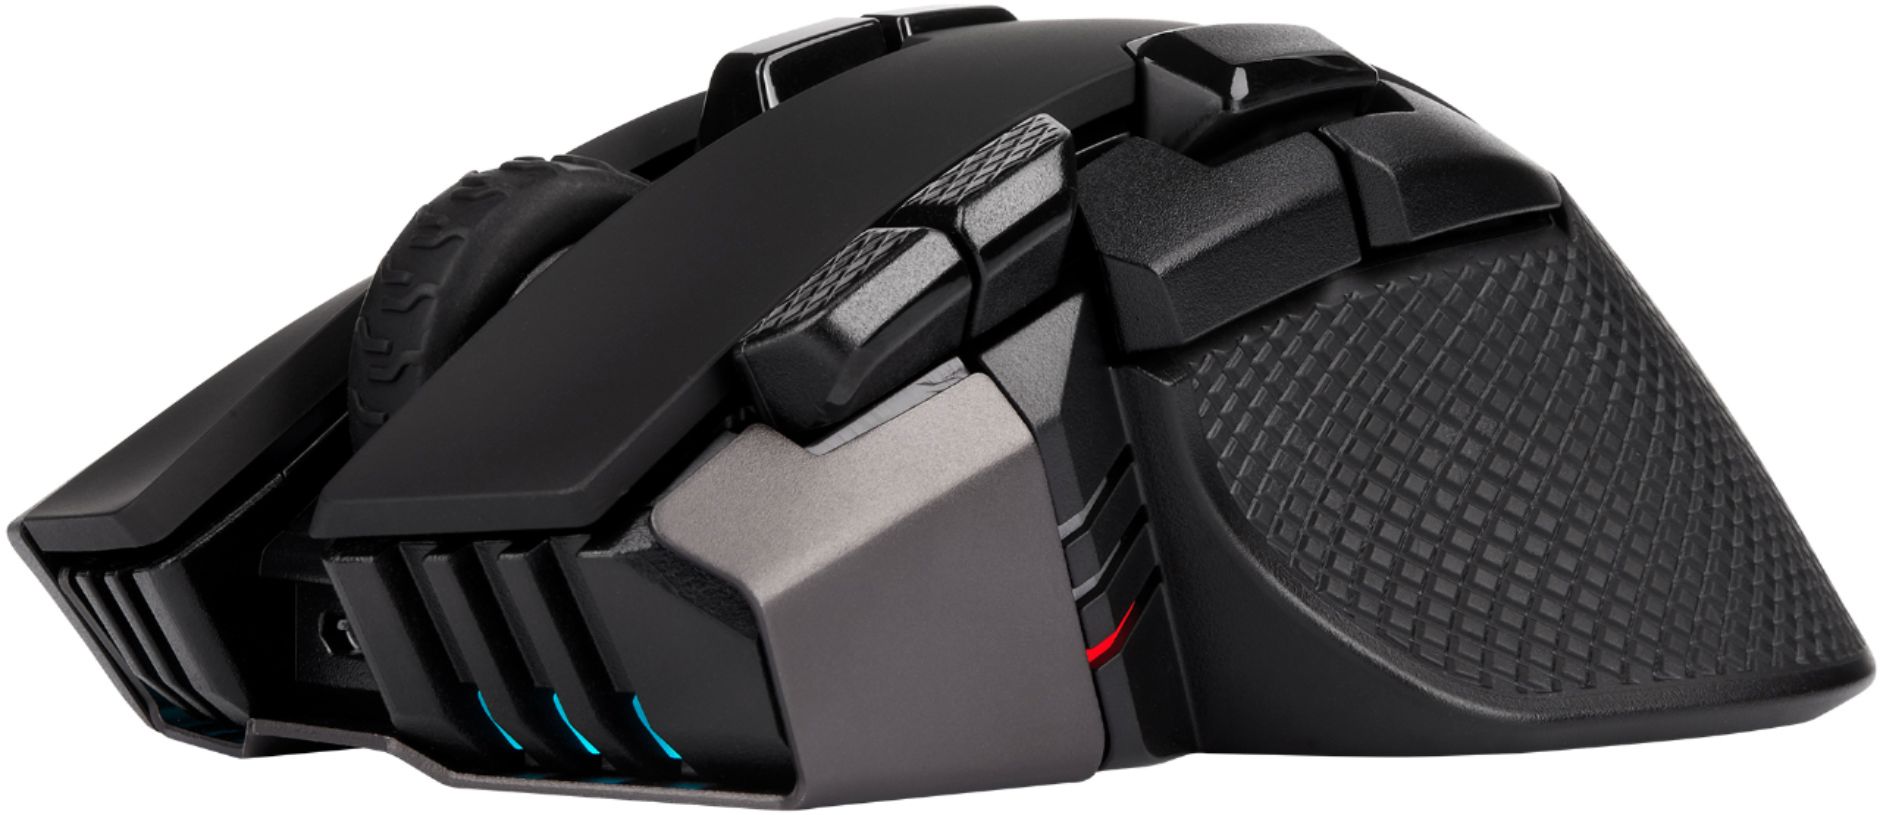 Ironclaw RGB Wireless et Glaive RGB Pro, Corsair lance deux nouvelles souris  gaming - GinjFo